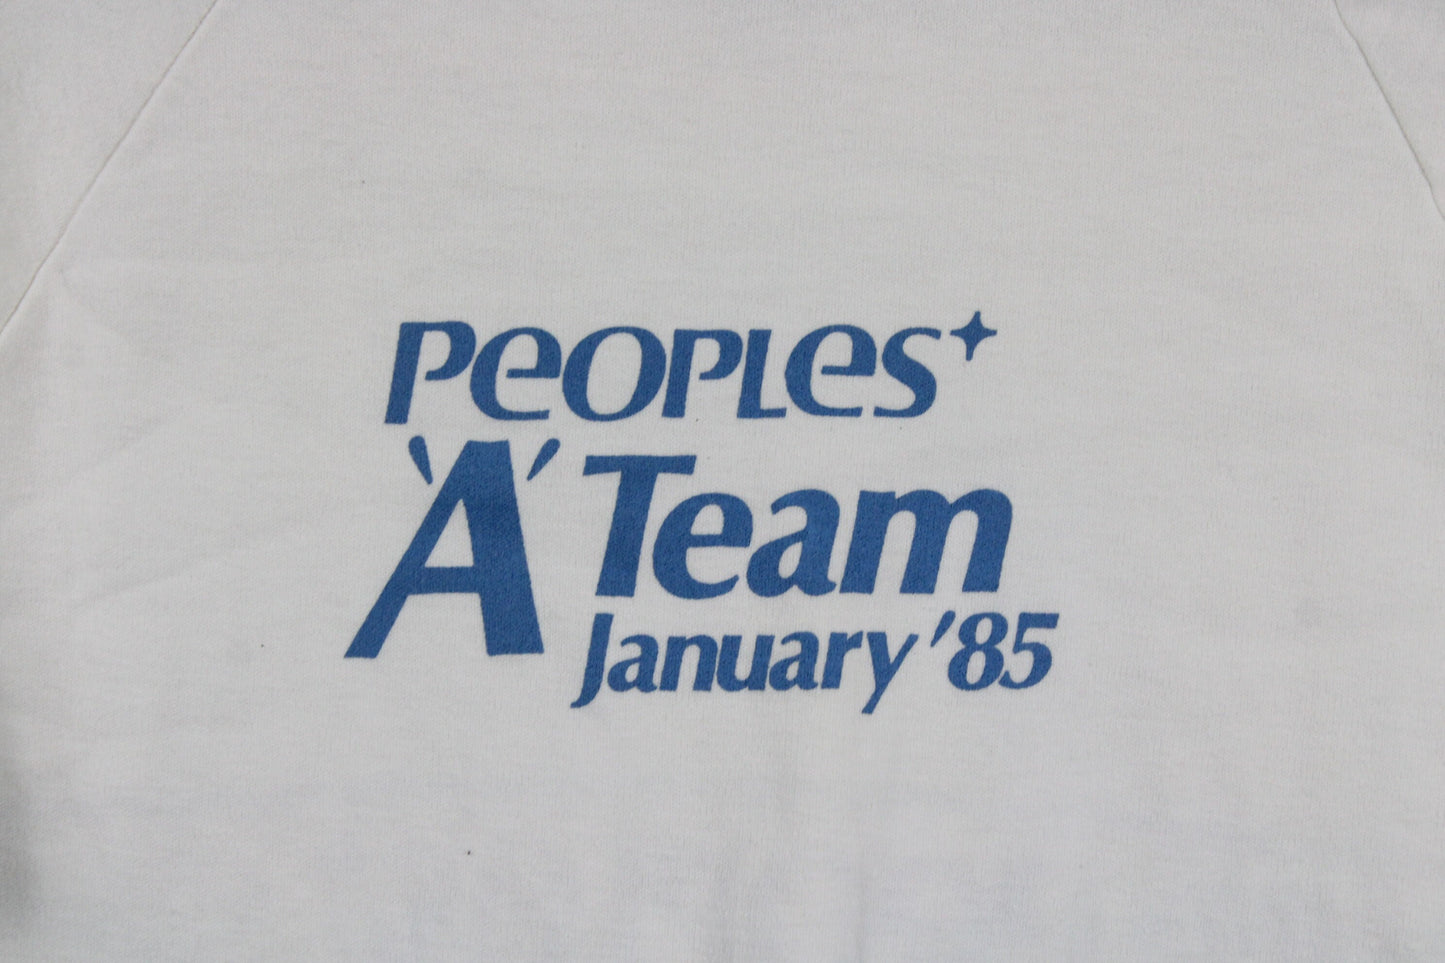 Peoples-Diamonds T-Shirt / Vintage Jewelry / American Graphic Promo Tee 80s / 1980s